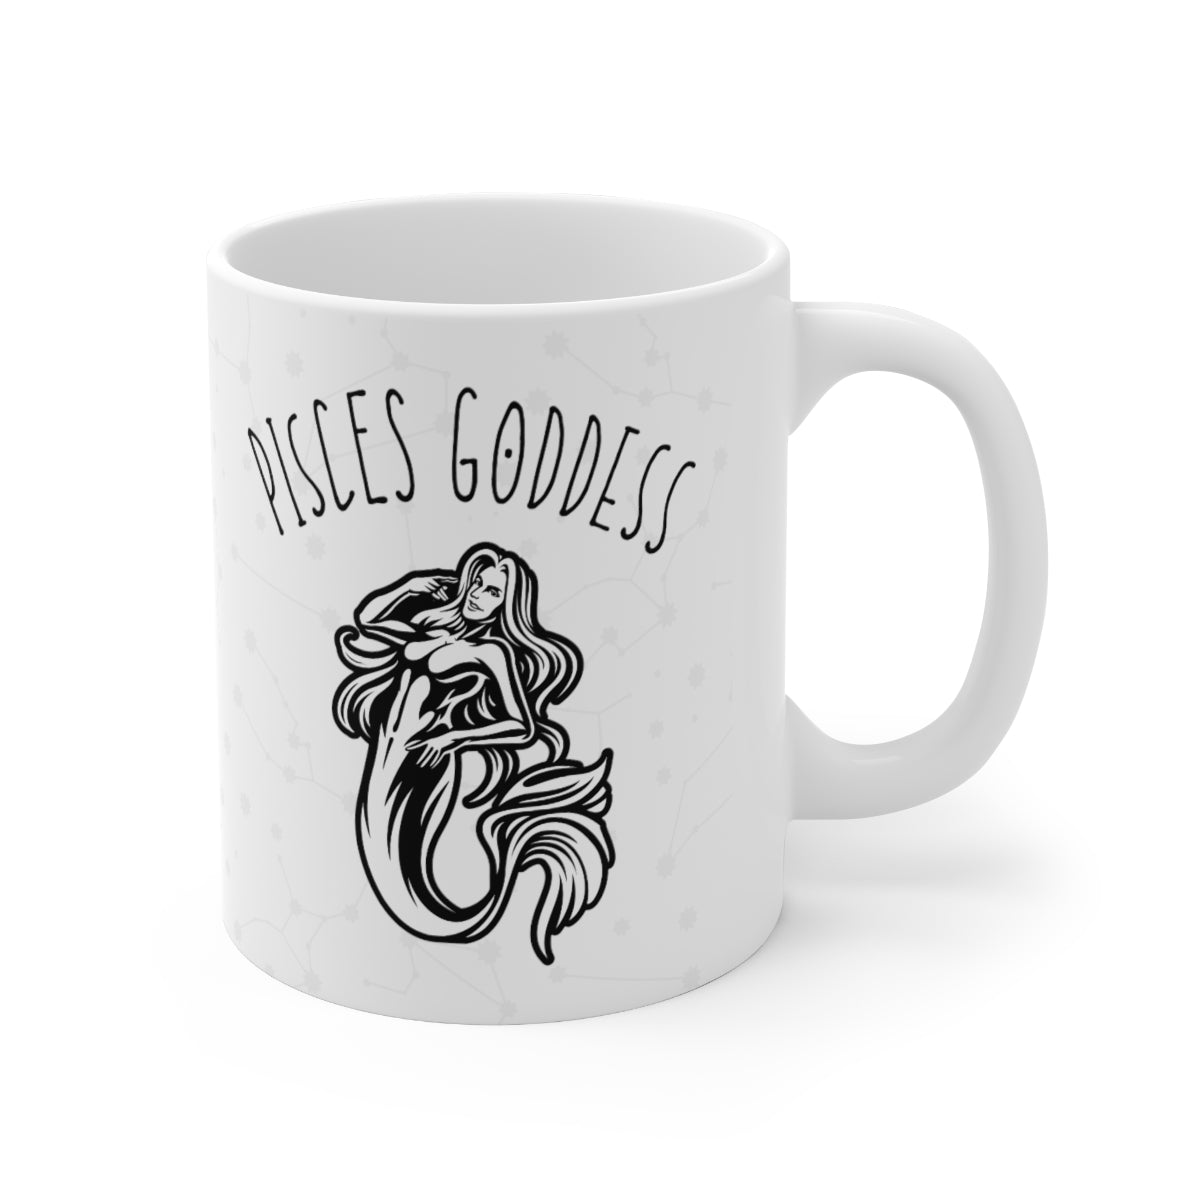 Pisces Goddess Astrology Mug 4